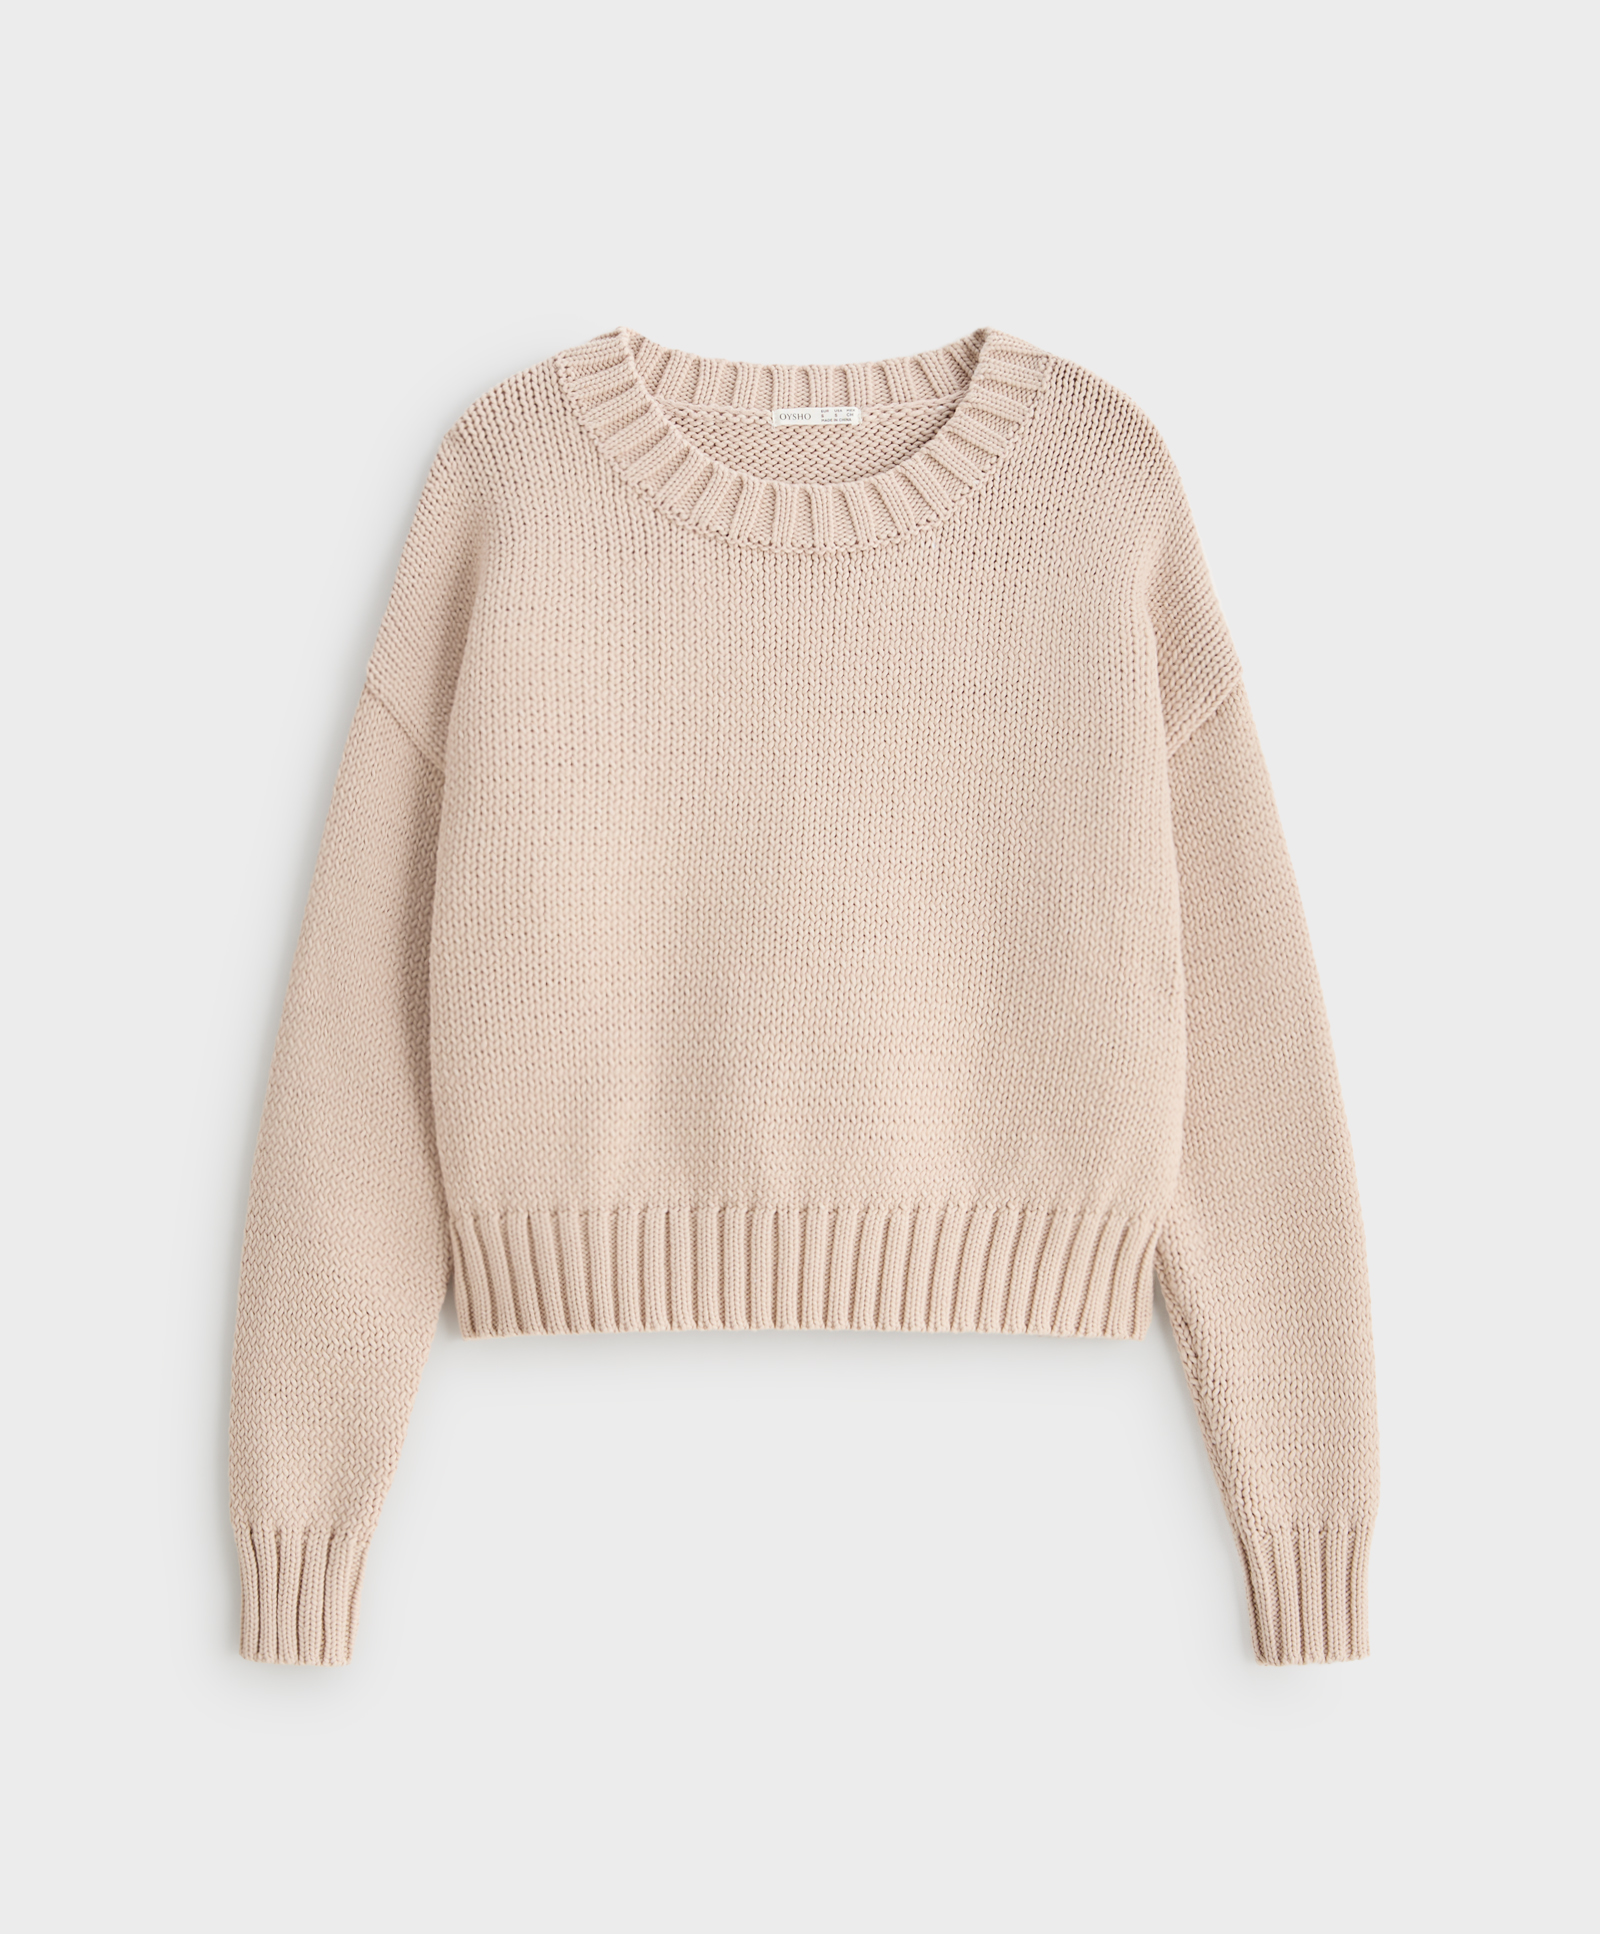 Cotton knit sweater